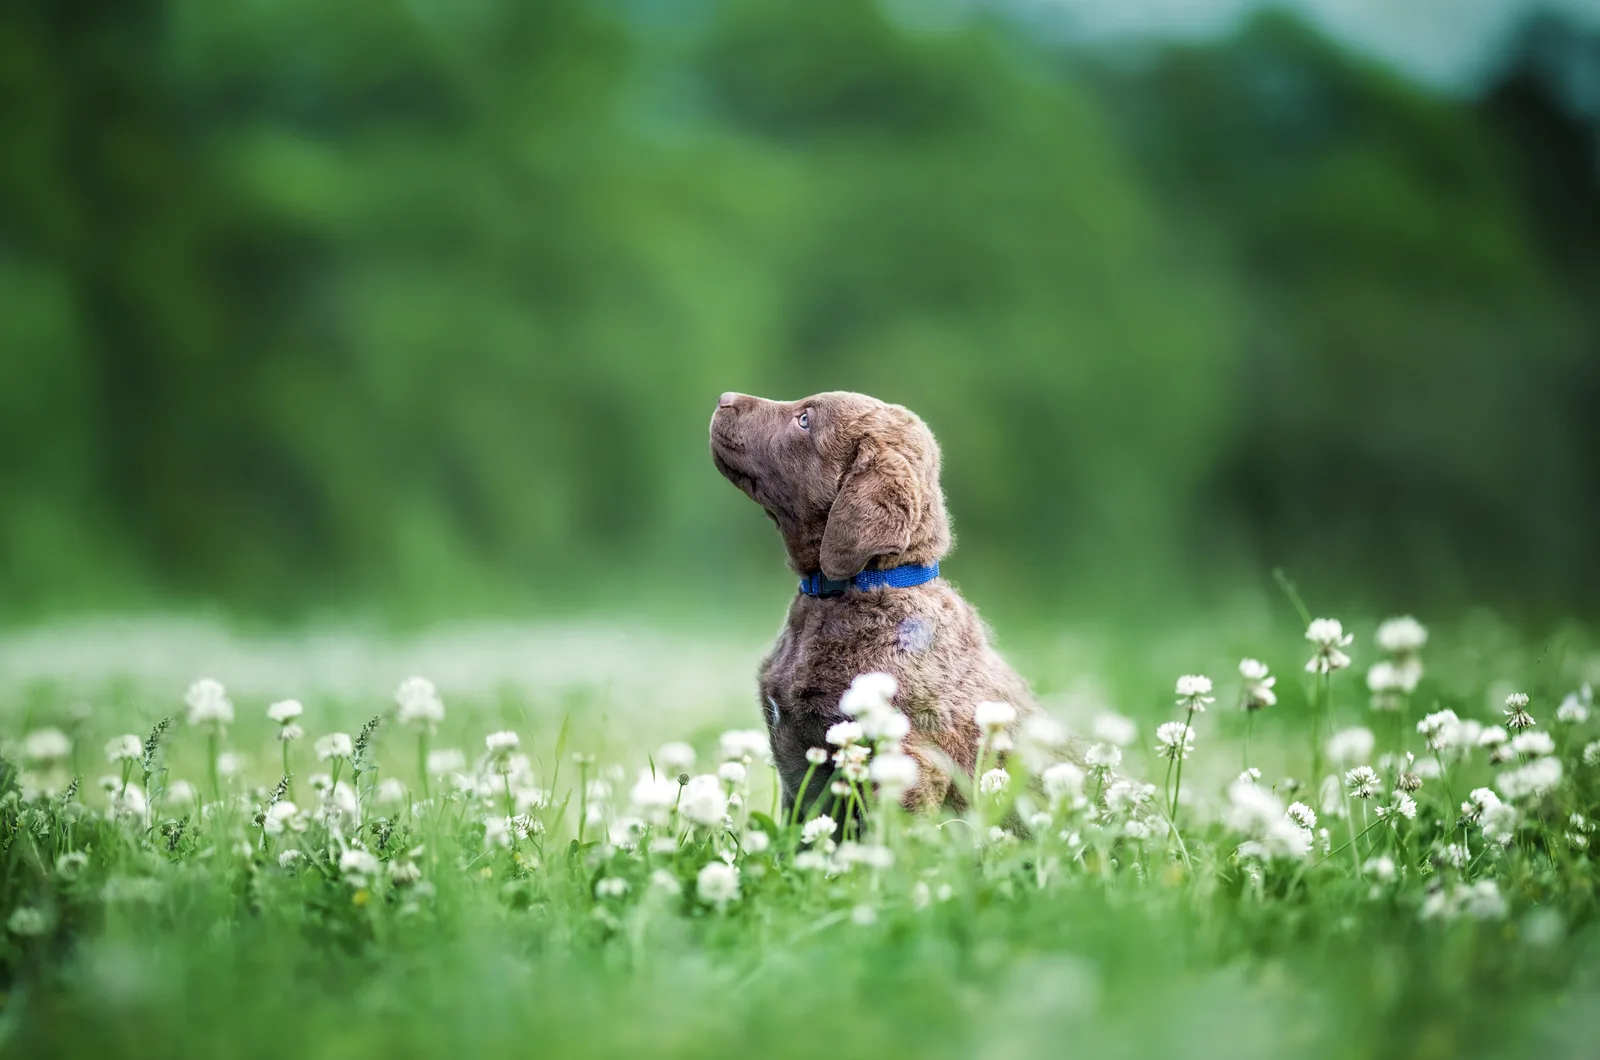 Chesapeake Bay Retriever puppy in a clover field